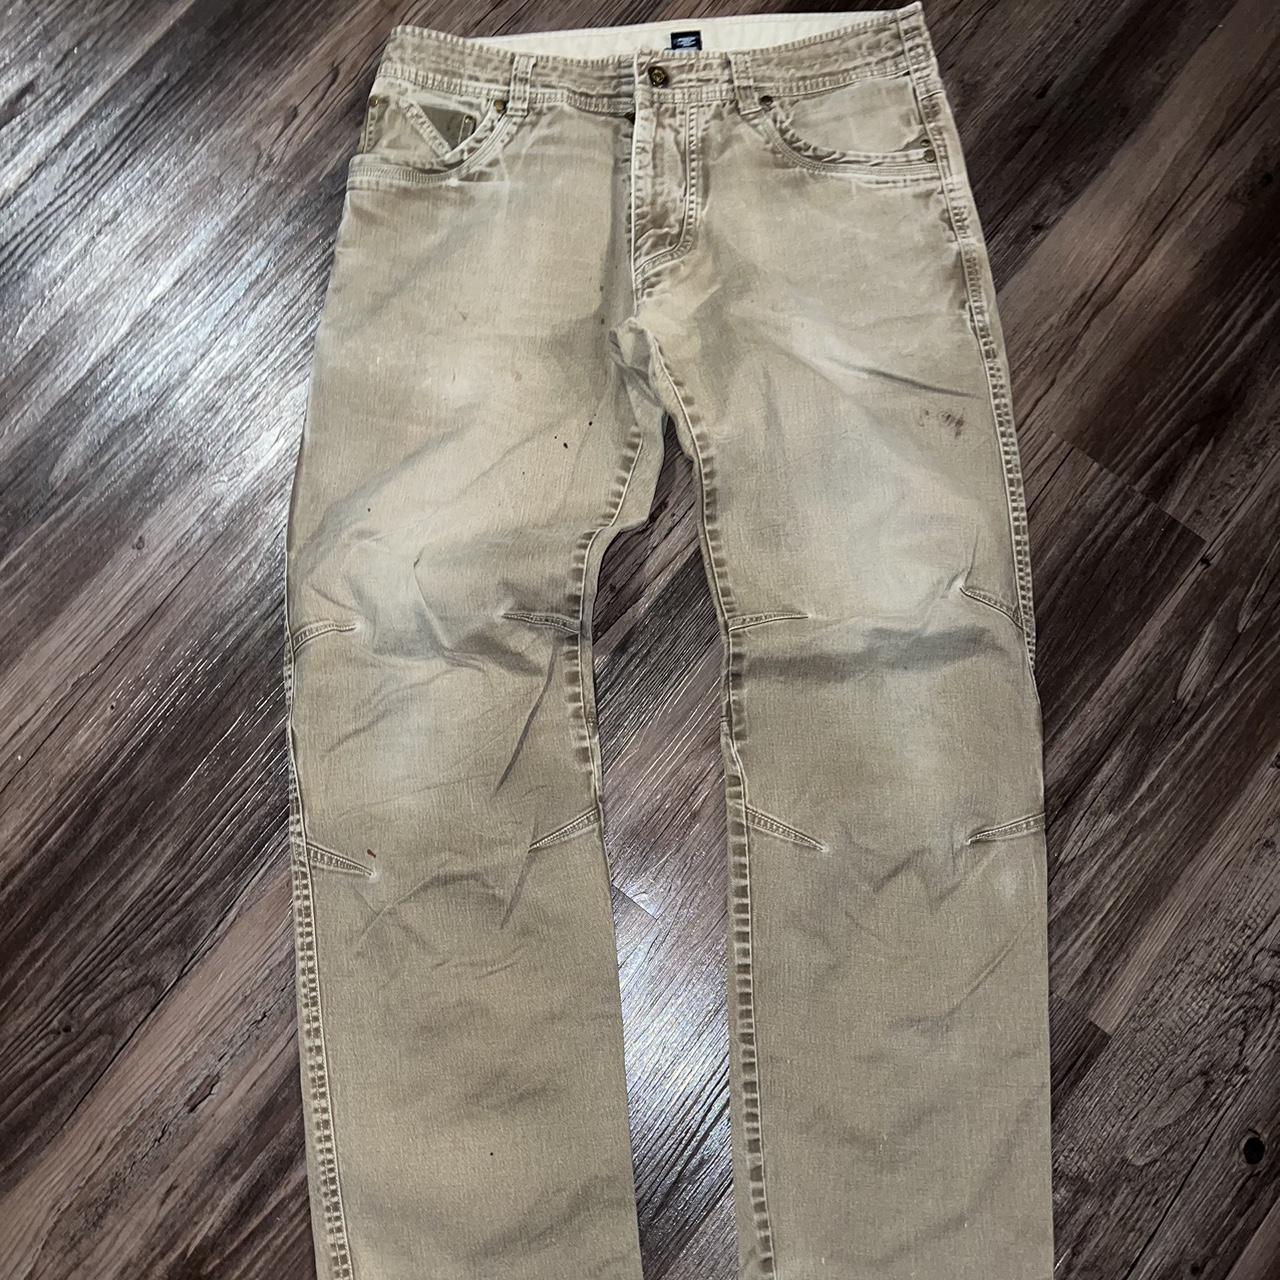 Distressed KUHL utility pants 🔥 Sz 34 x 34 #utility... - Depop